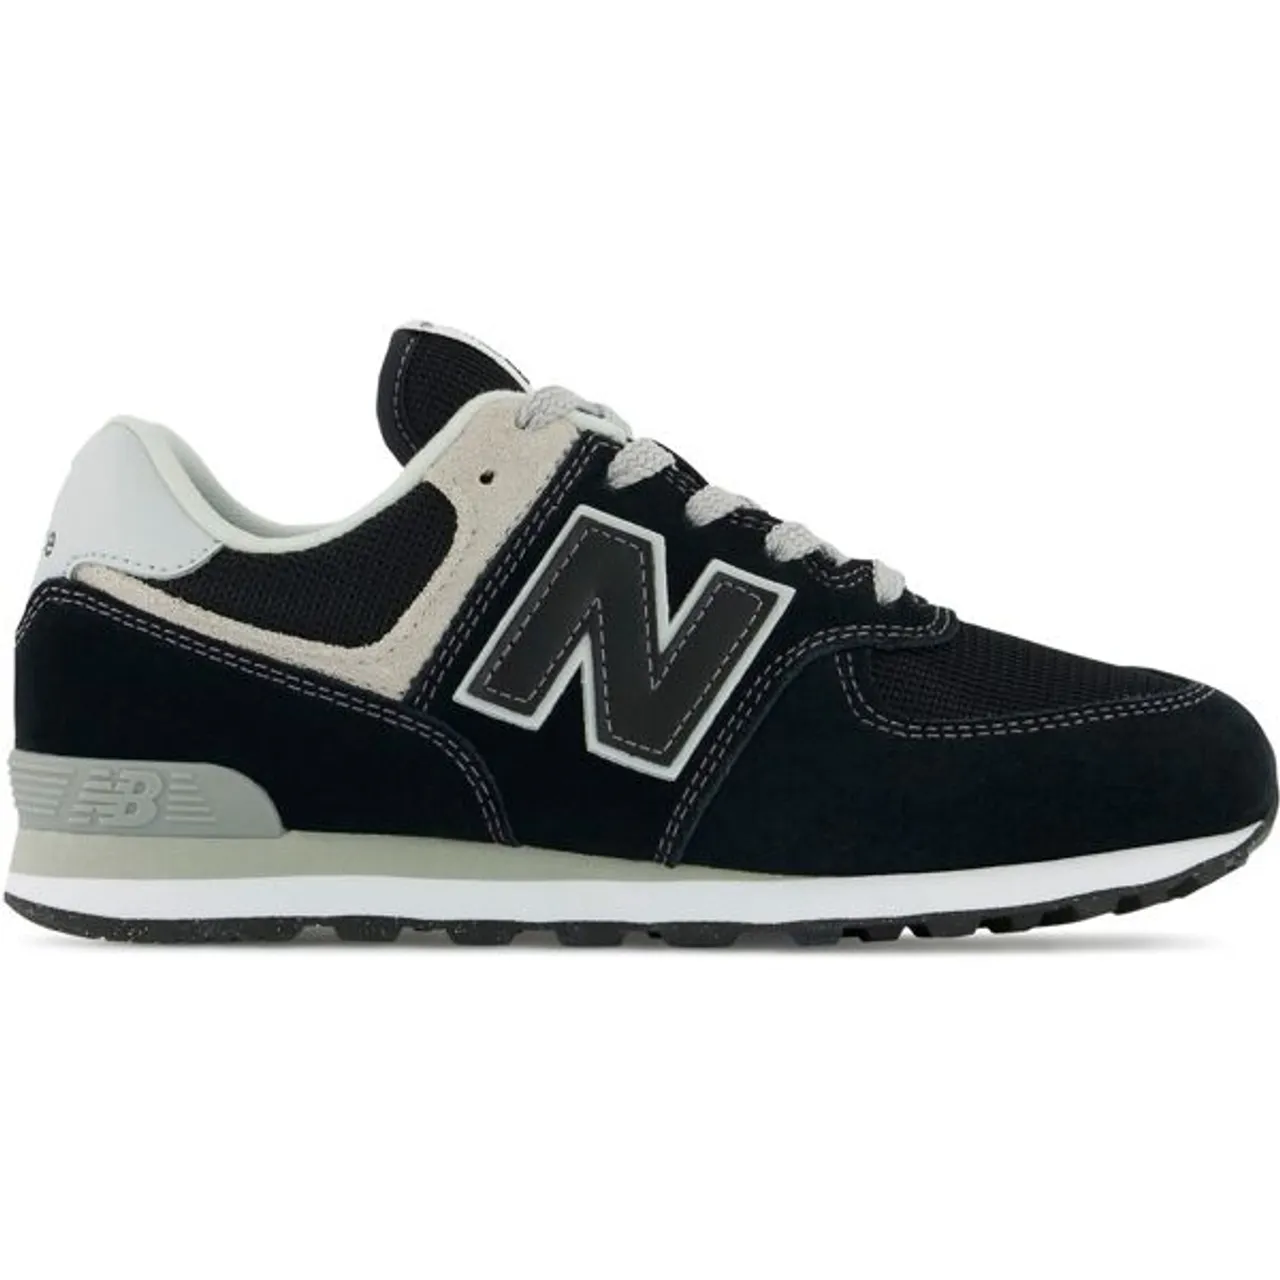 Sneaker NEW BALANCE "GC574" Gr. 36, schwarz (schwarz, grau) Schuhe Sneaker